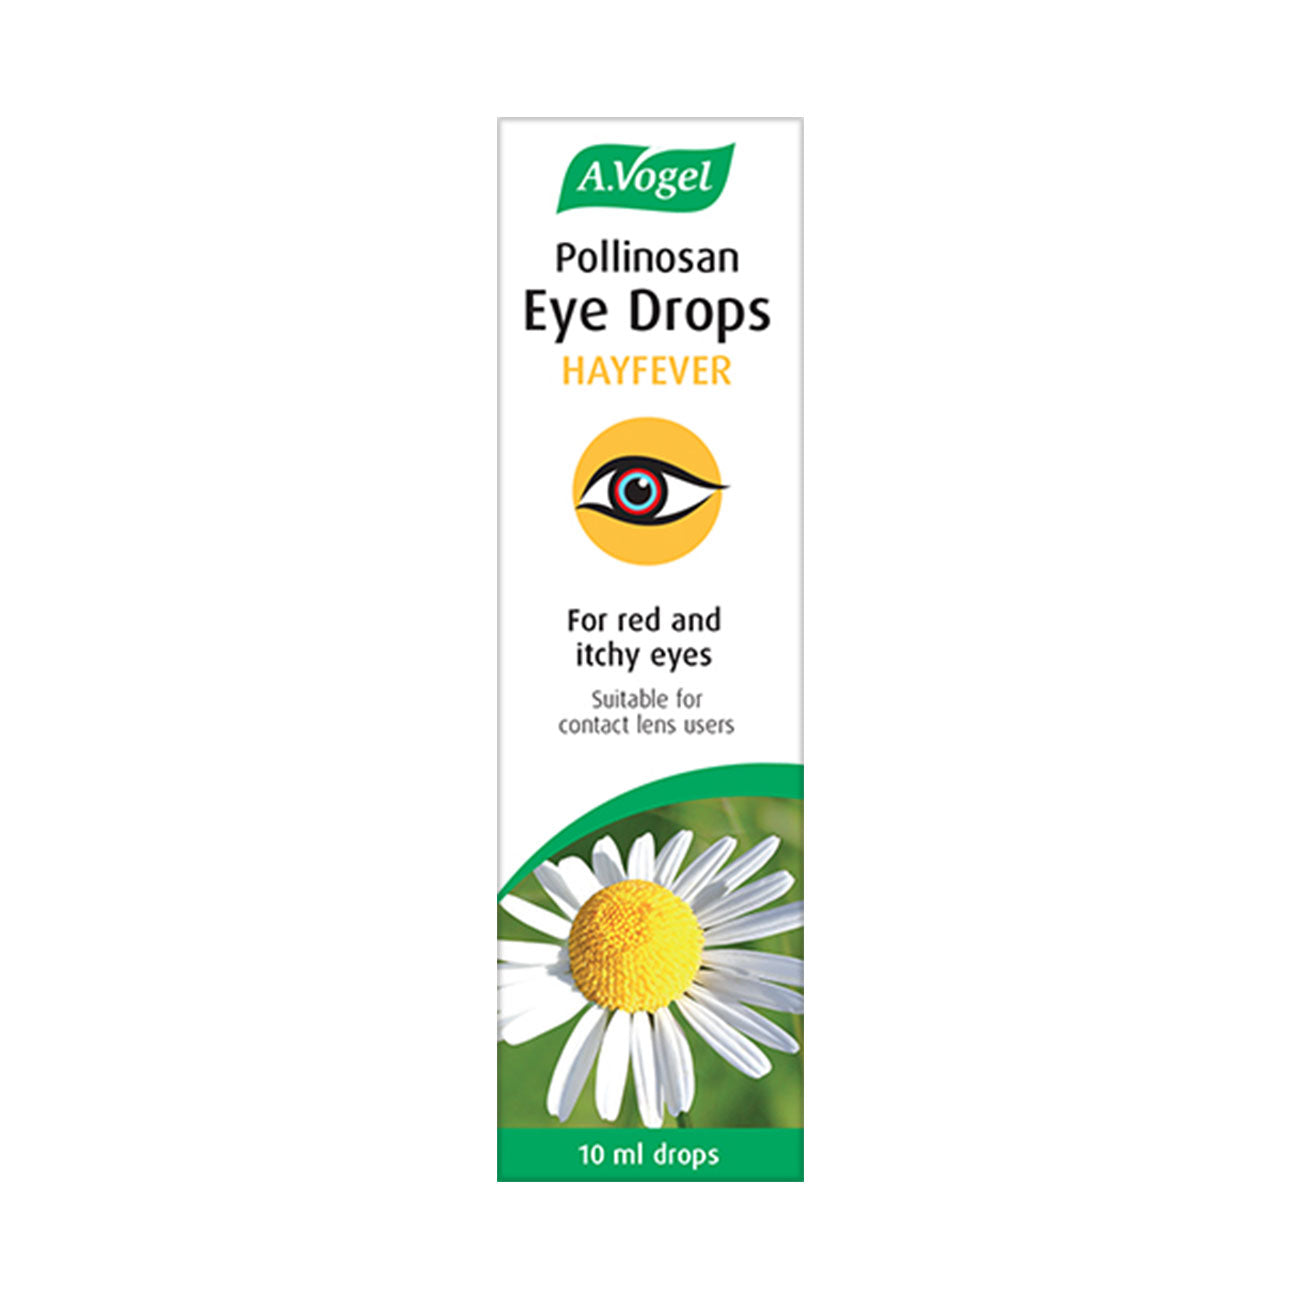 Pollinosan Hayfever Eye Drops 10ml